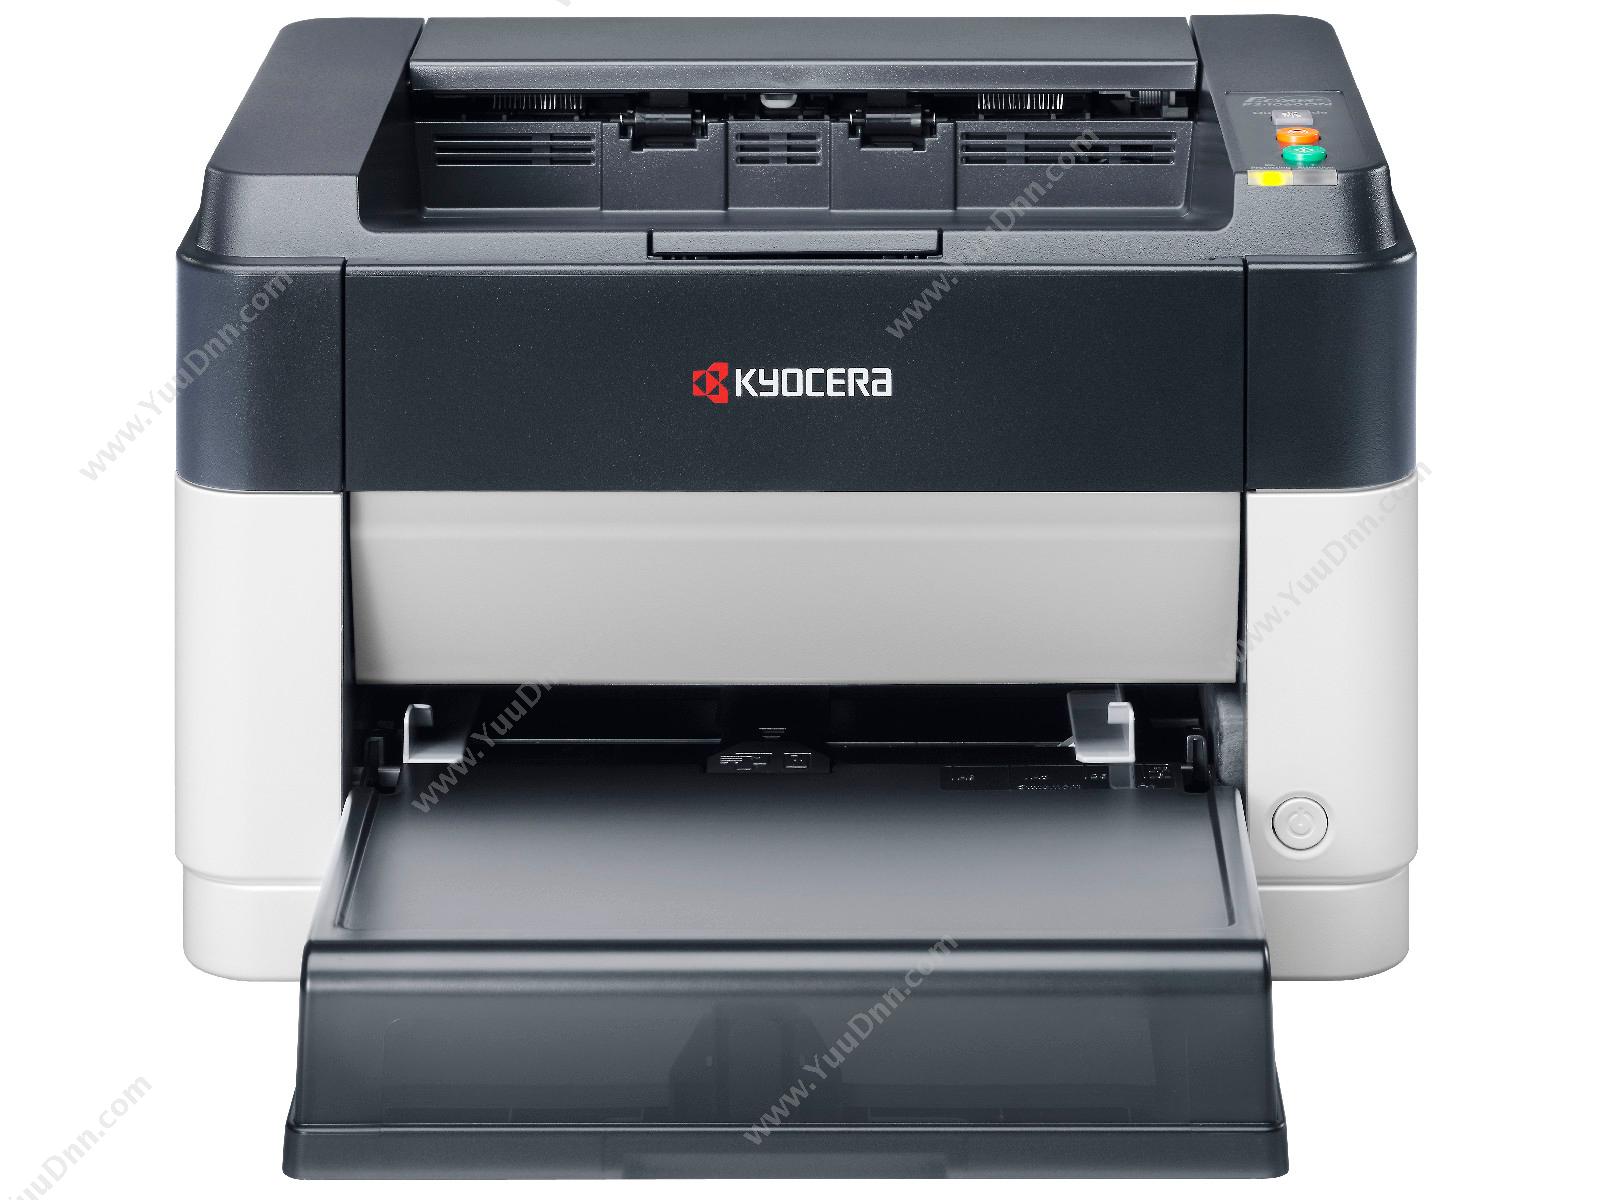 京瓷 KyoceraFS-1060DNA4黑白激光打印机